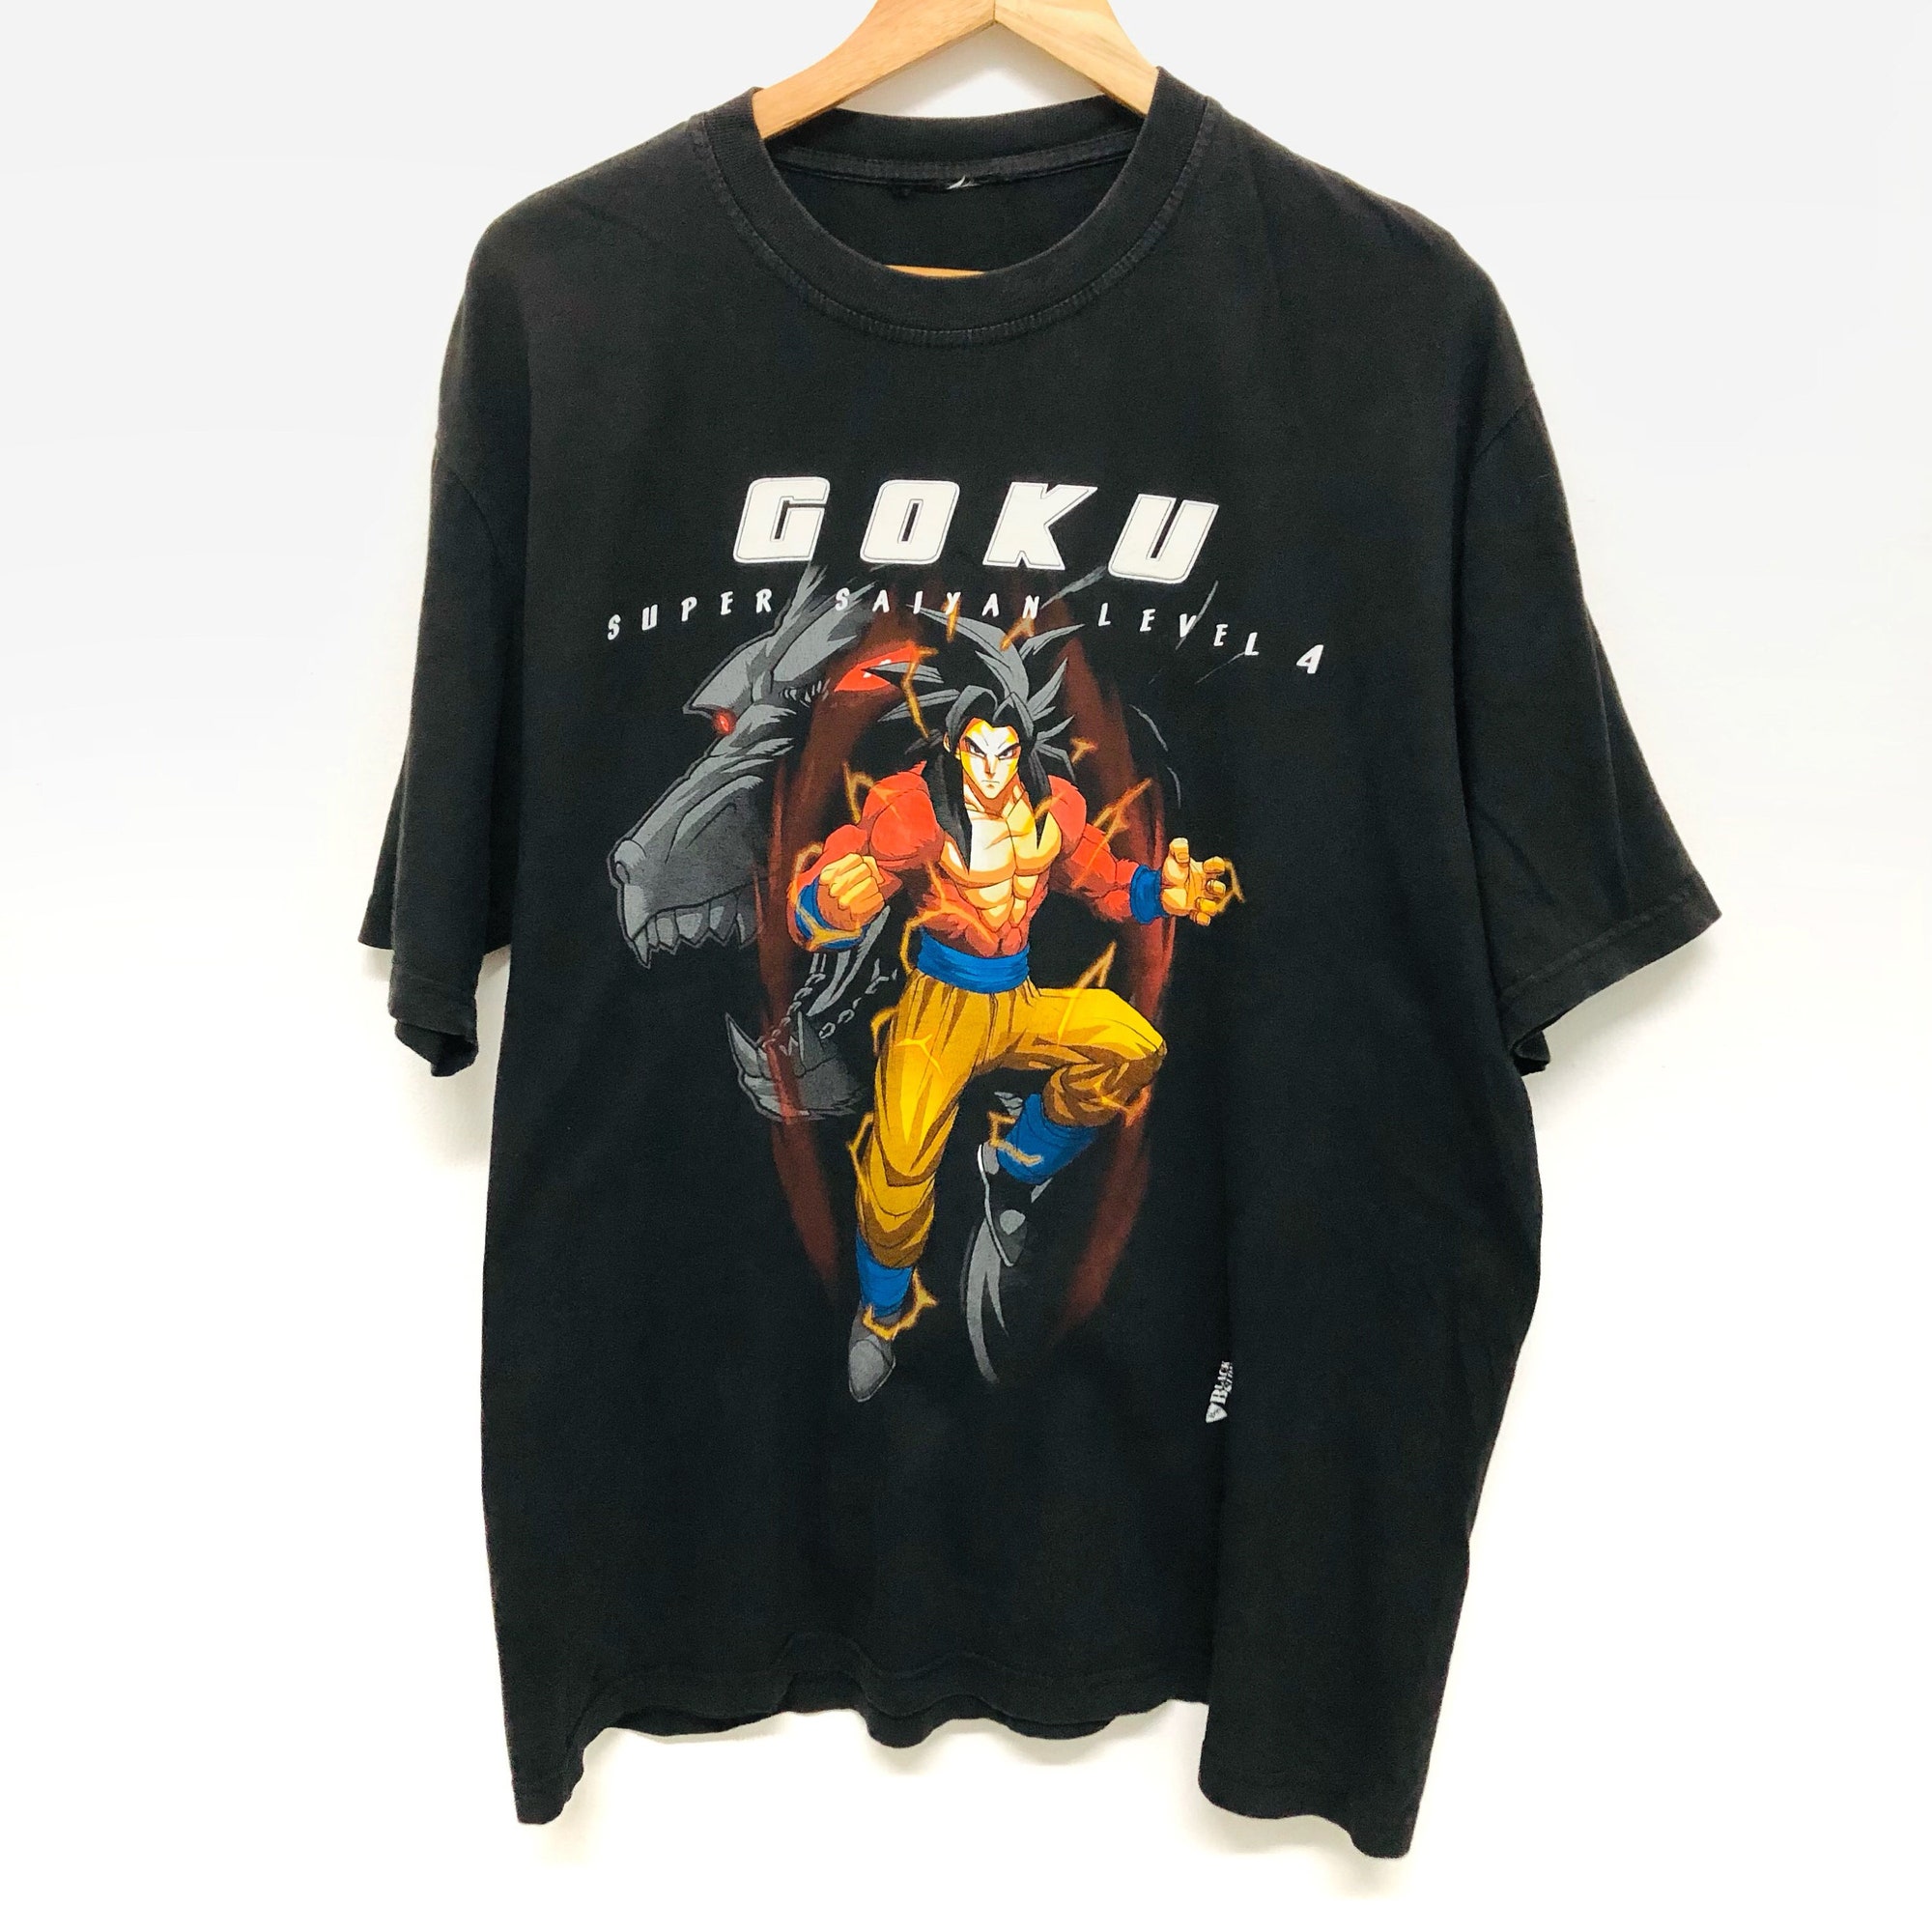 Discover Dragon Ball Z Goku T-shirt Super saiyan level